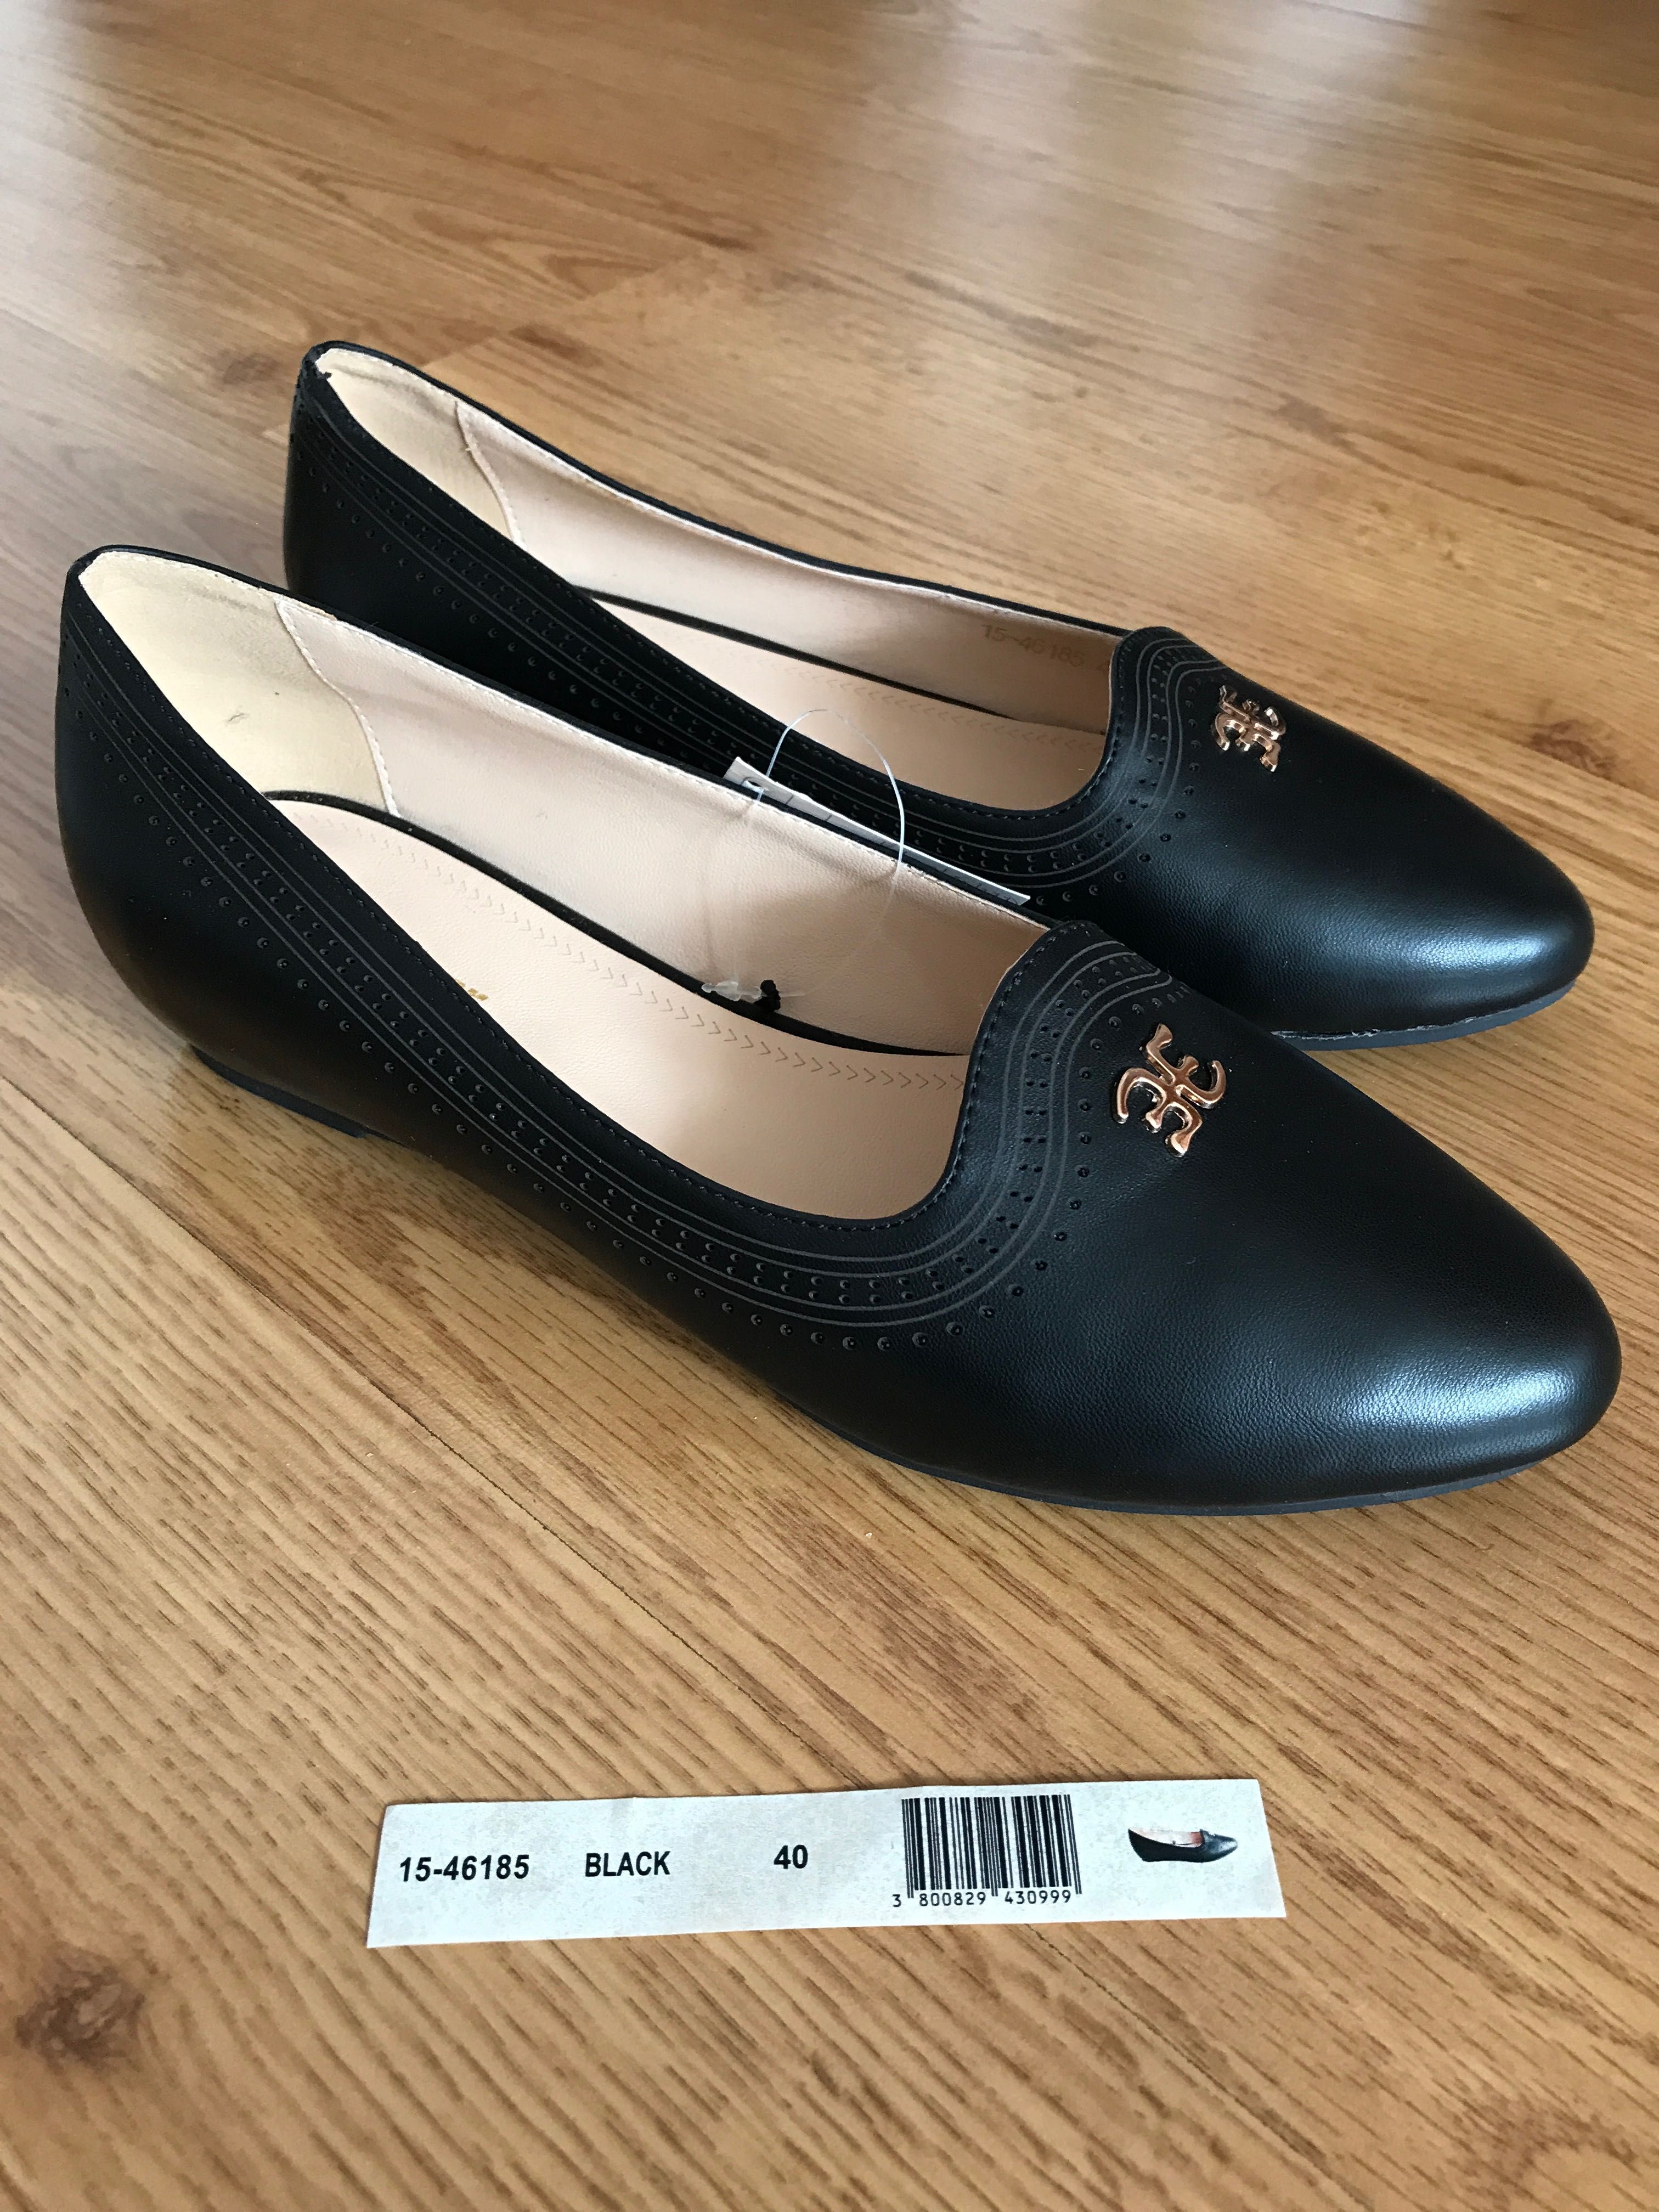 Pantofi balerini eleganti - BLACK (40) MatStar